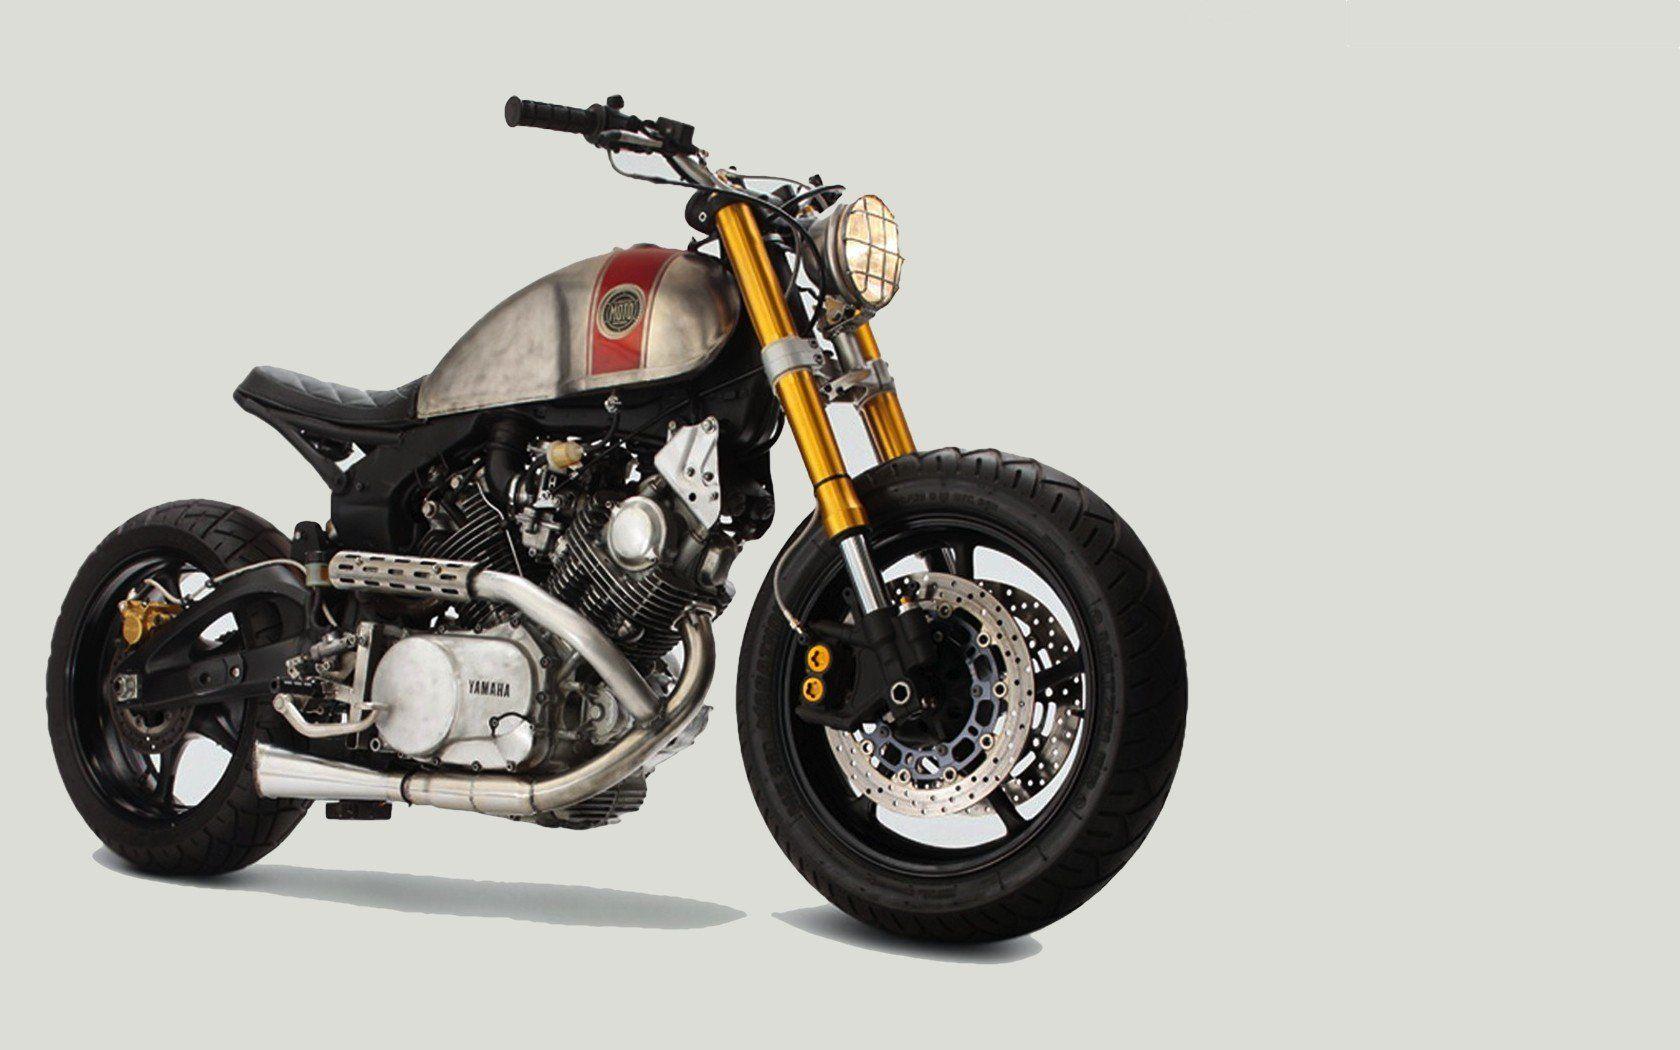 Yamaha concept art vehicles motorcycles virago 750 cafe racer